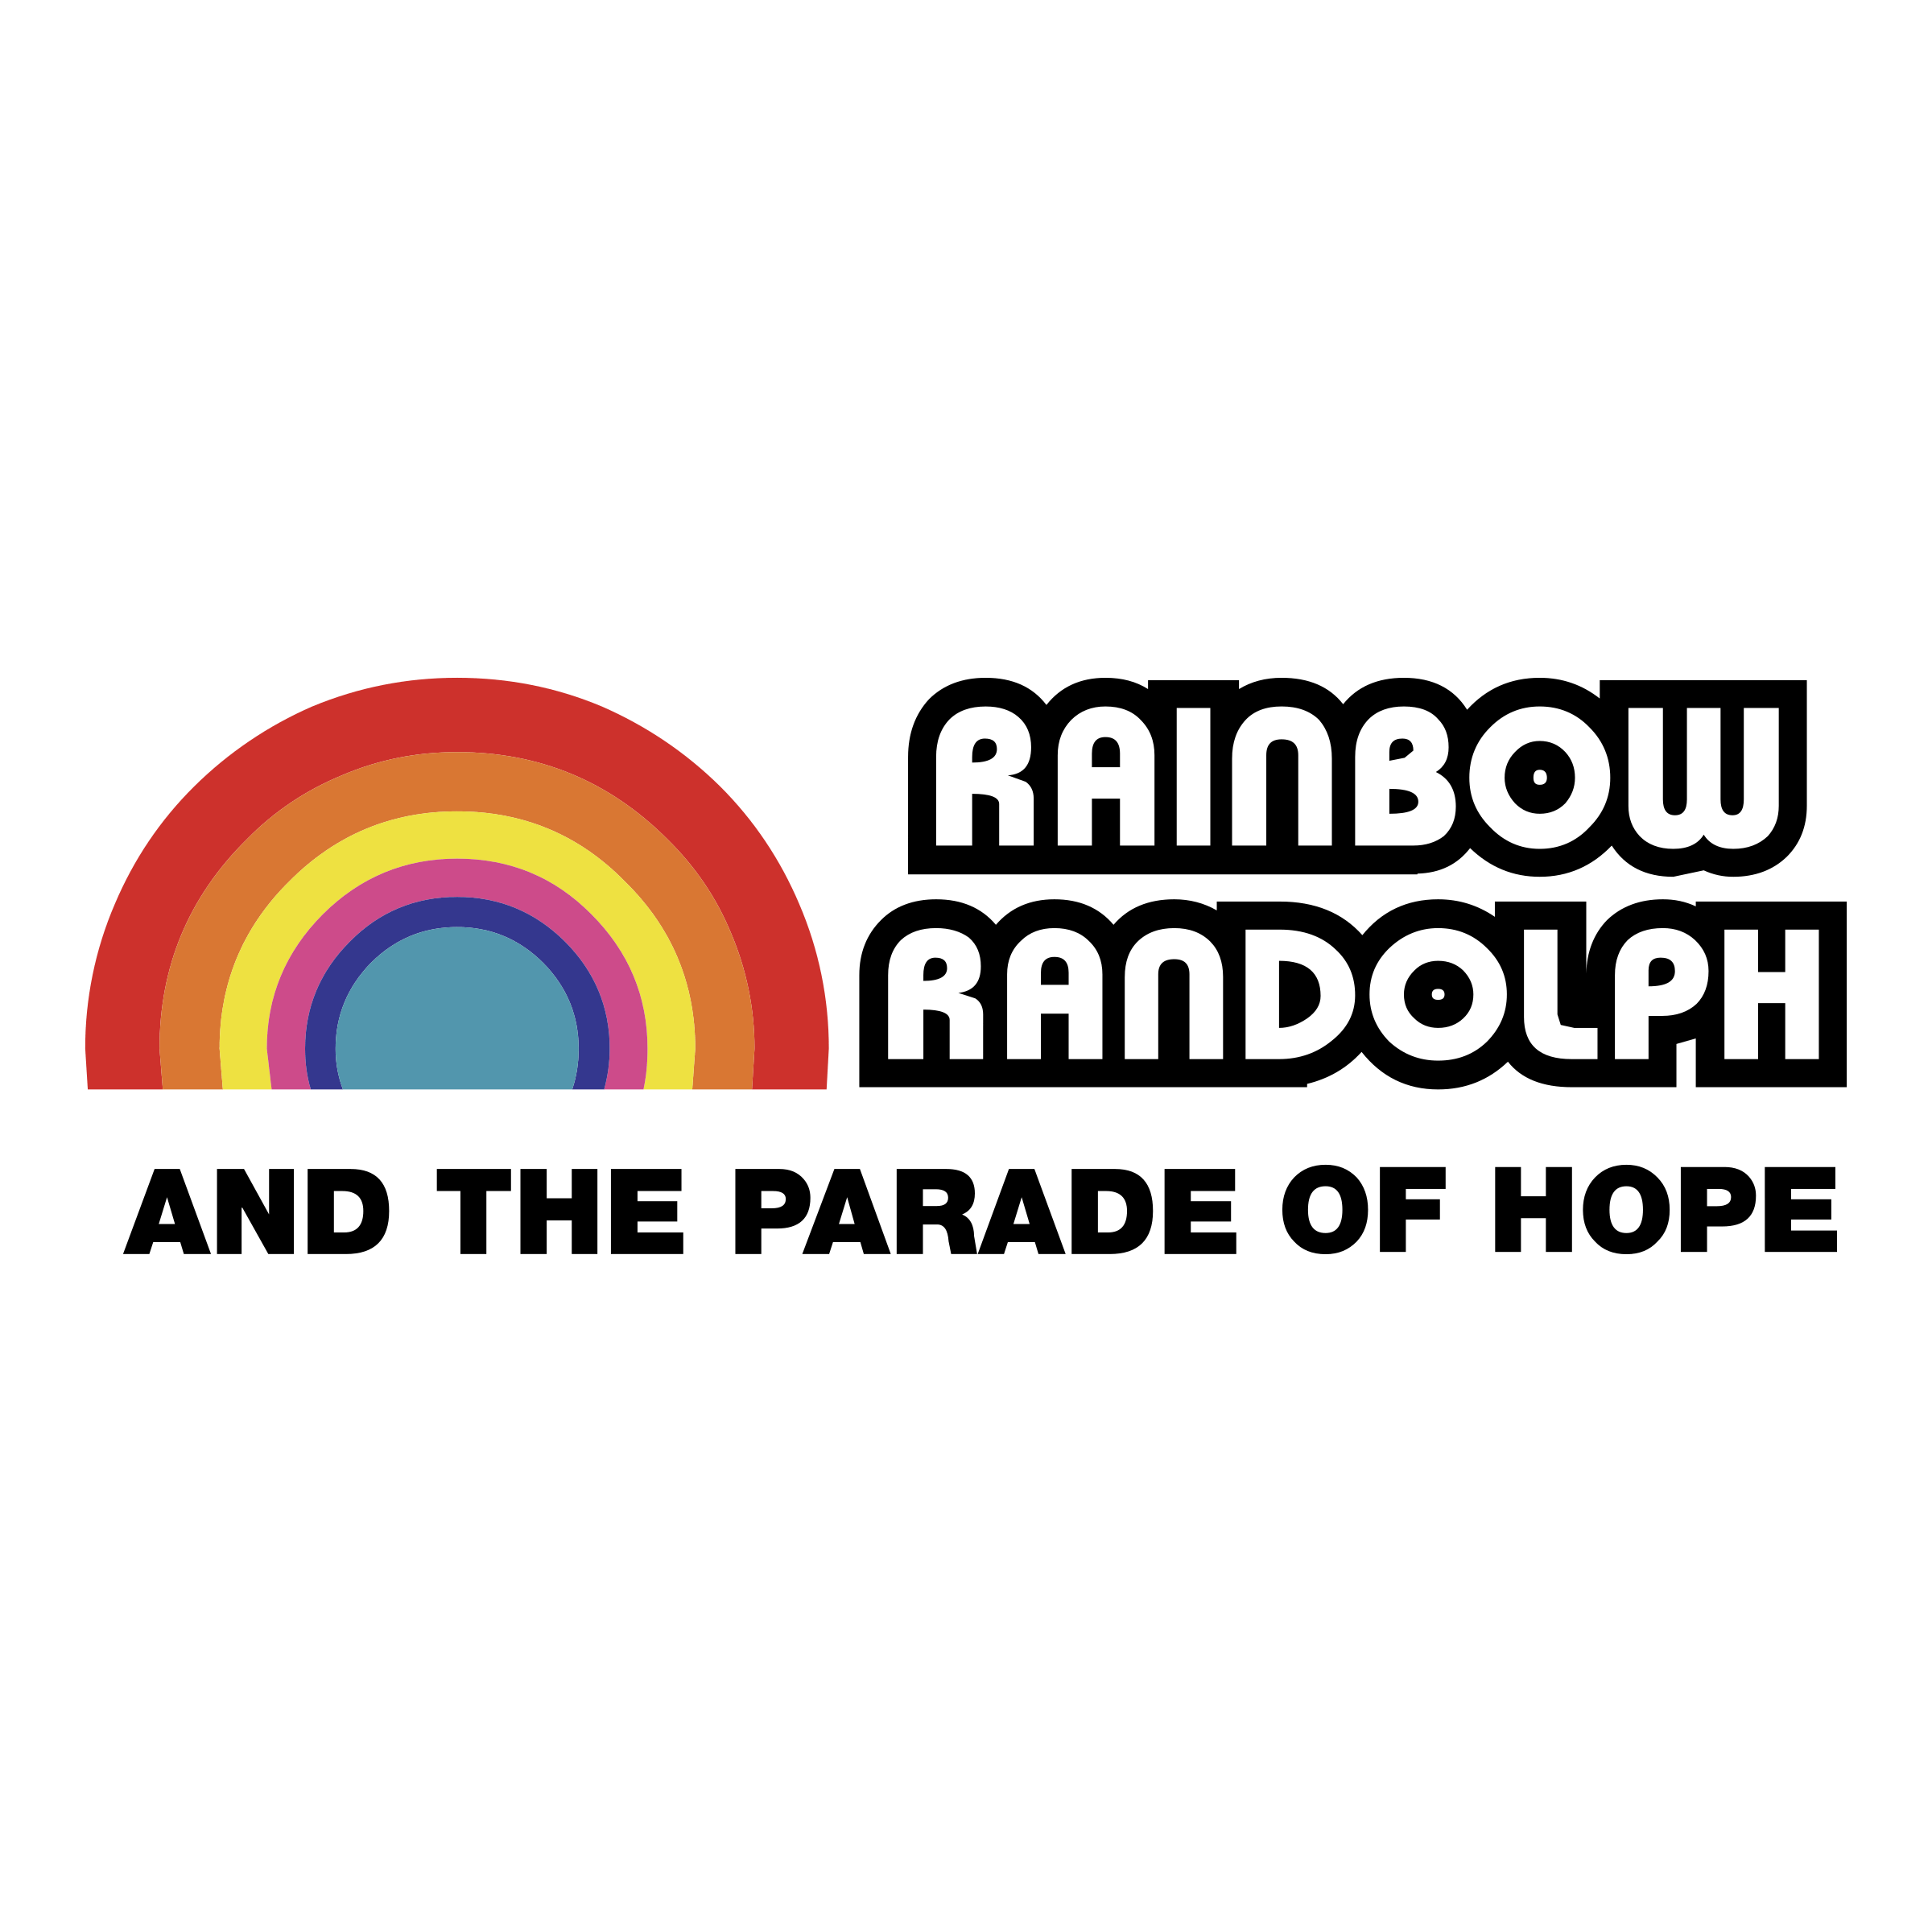 Randolph Logo - Rainbow Randolph Logo PNG Transparent & SVG Vector - Freebie Supply